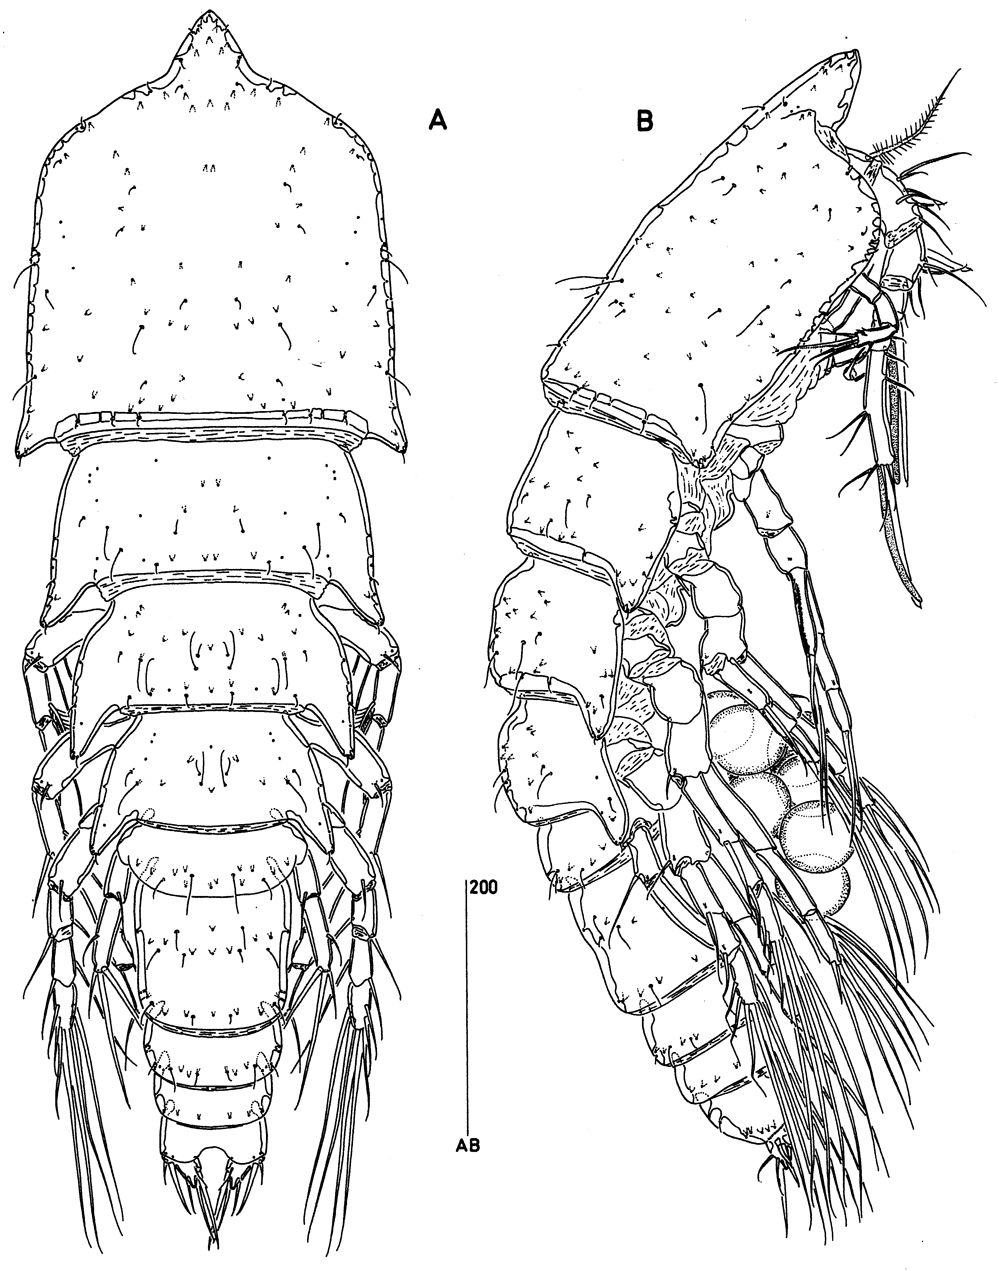 Species Goniopsyllus clausi - Plate 1 of morphological figures